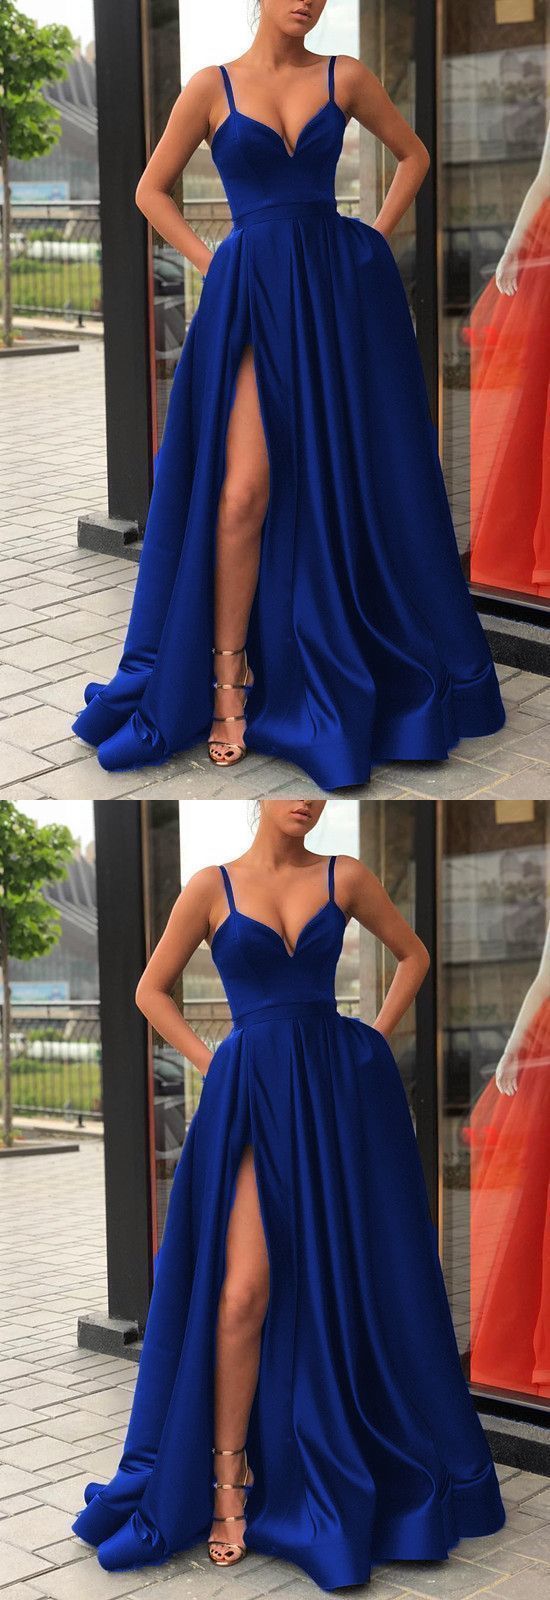 Royal Blue Prom Dress, Evening Dress, Dance Dresses, Graduation School Party Gown   cg10625